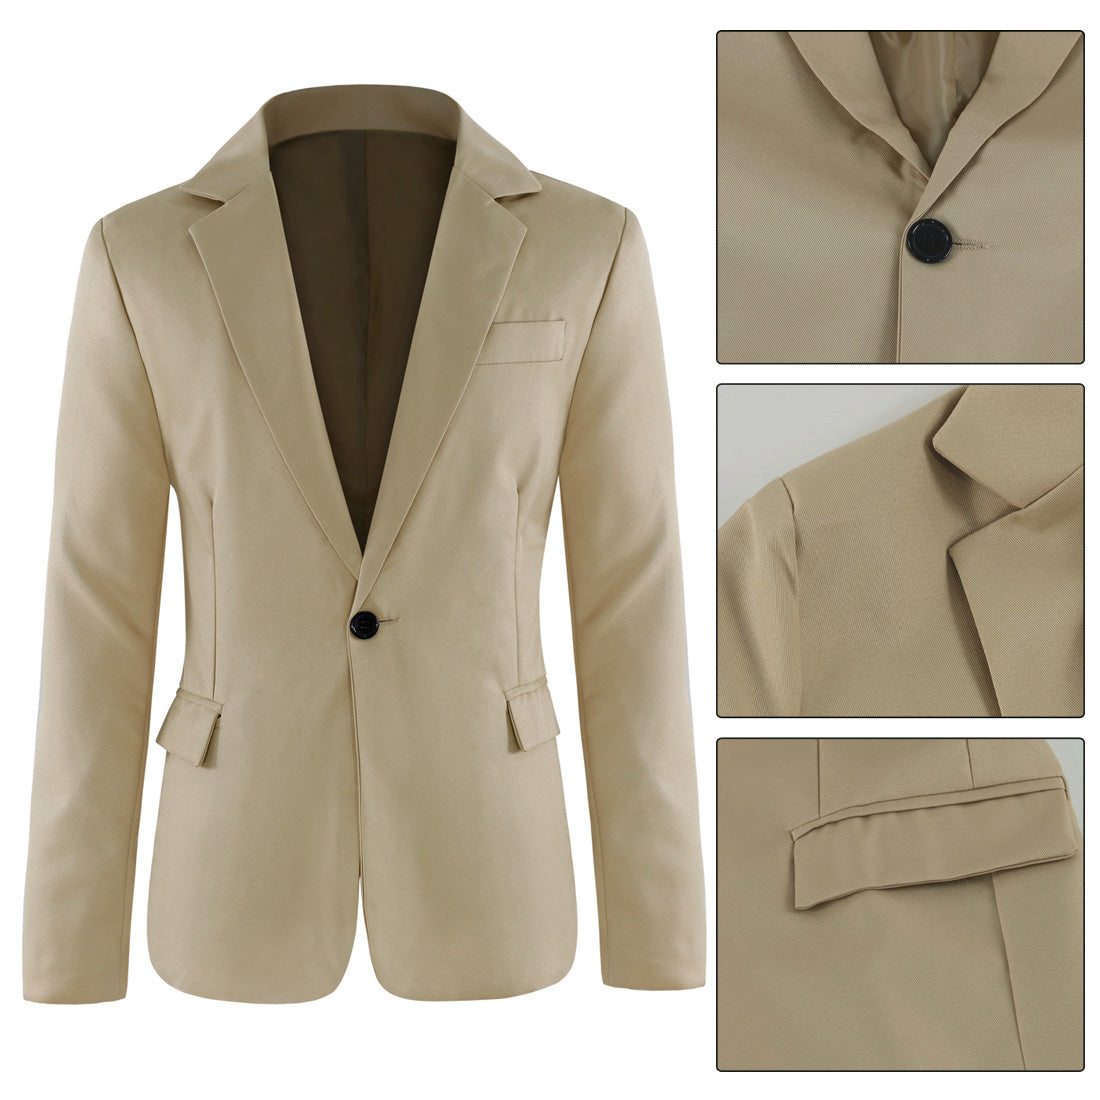 Men's Slim Fit Casual Blazer Jacket Khaki